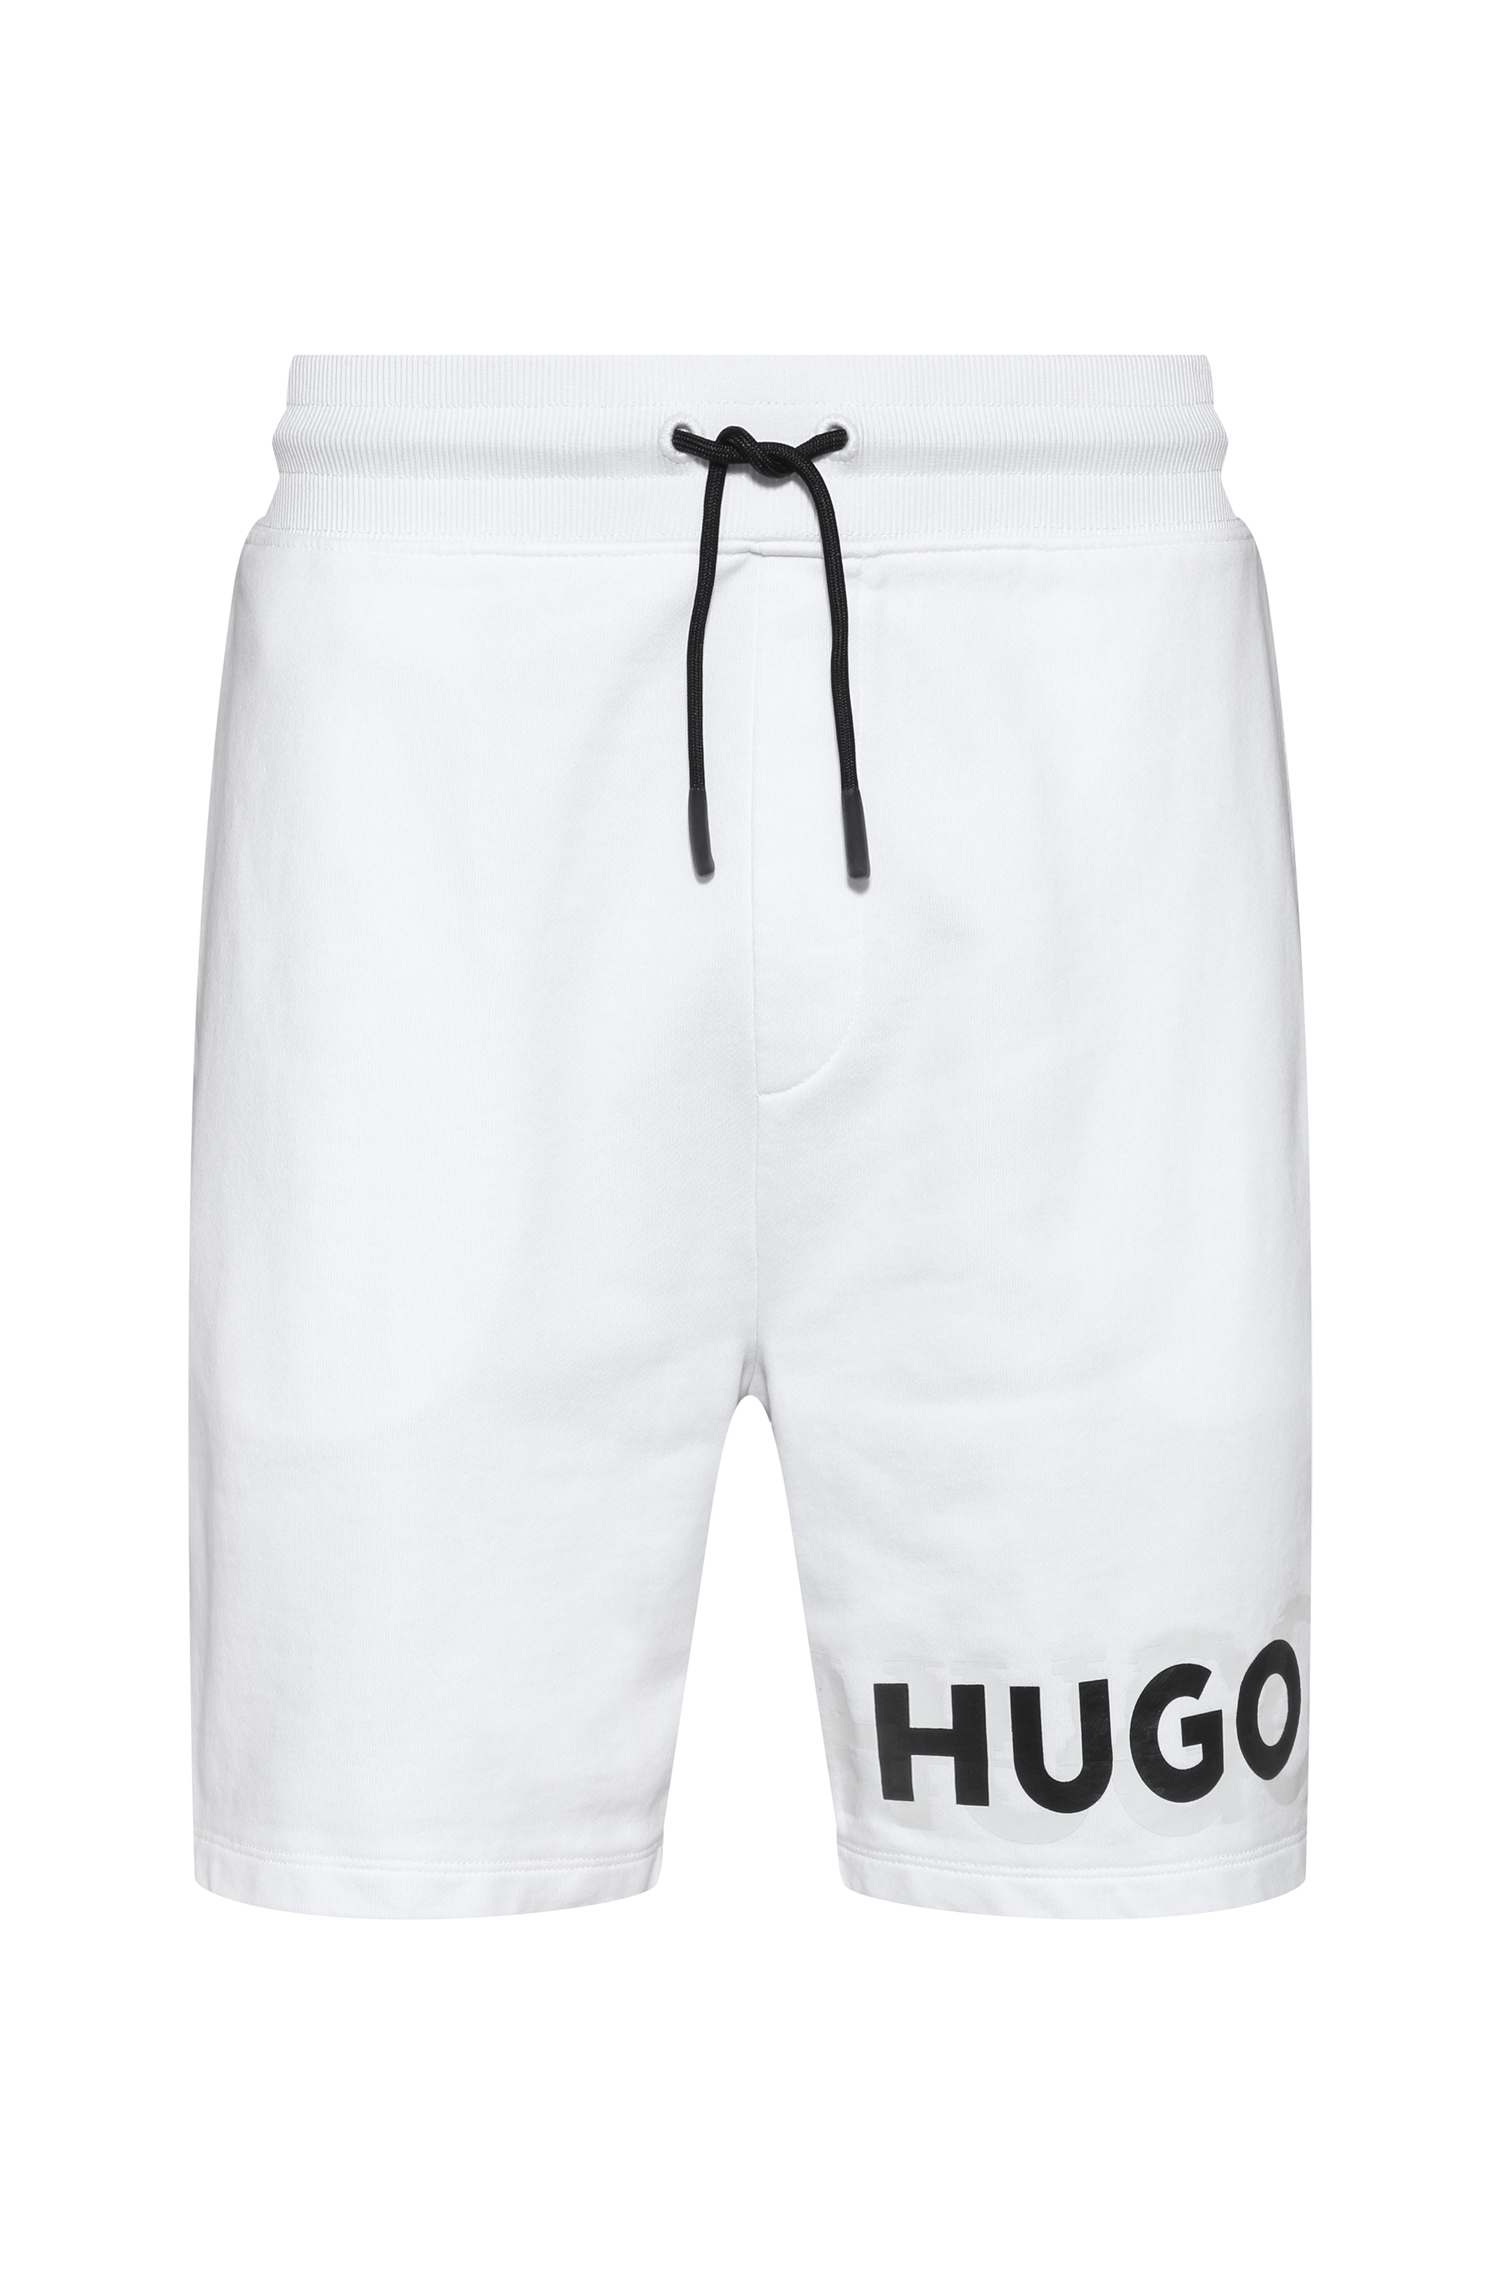 HUGO 50468260 Dilton 10217099 01 Herren Cotton-jersey Shorts logo White 100